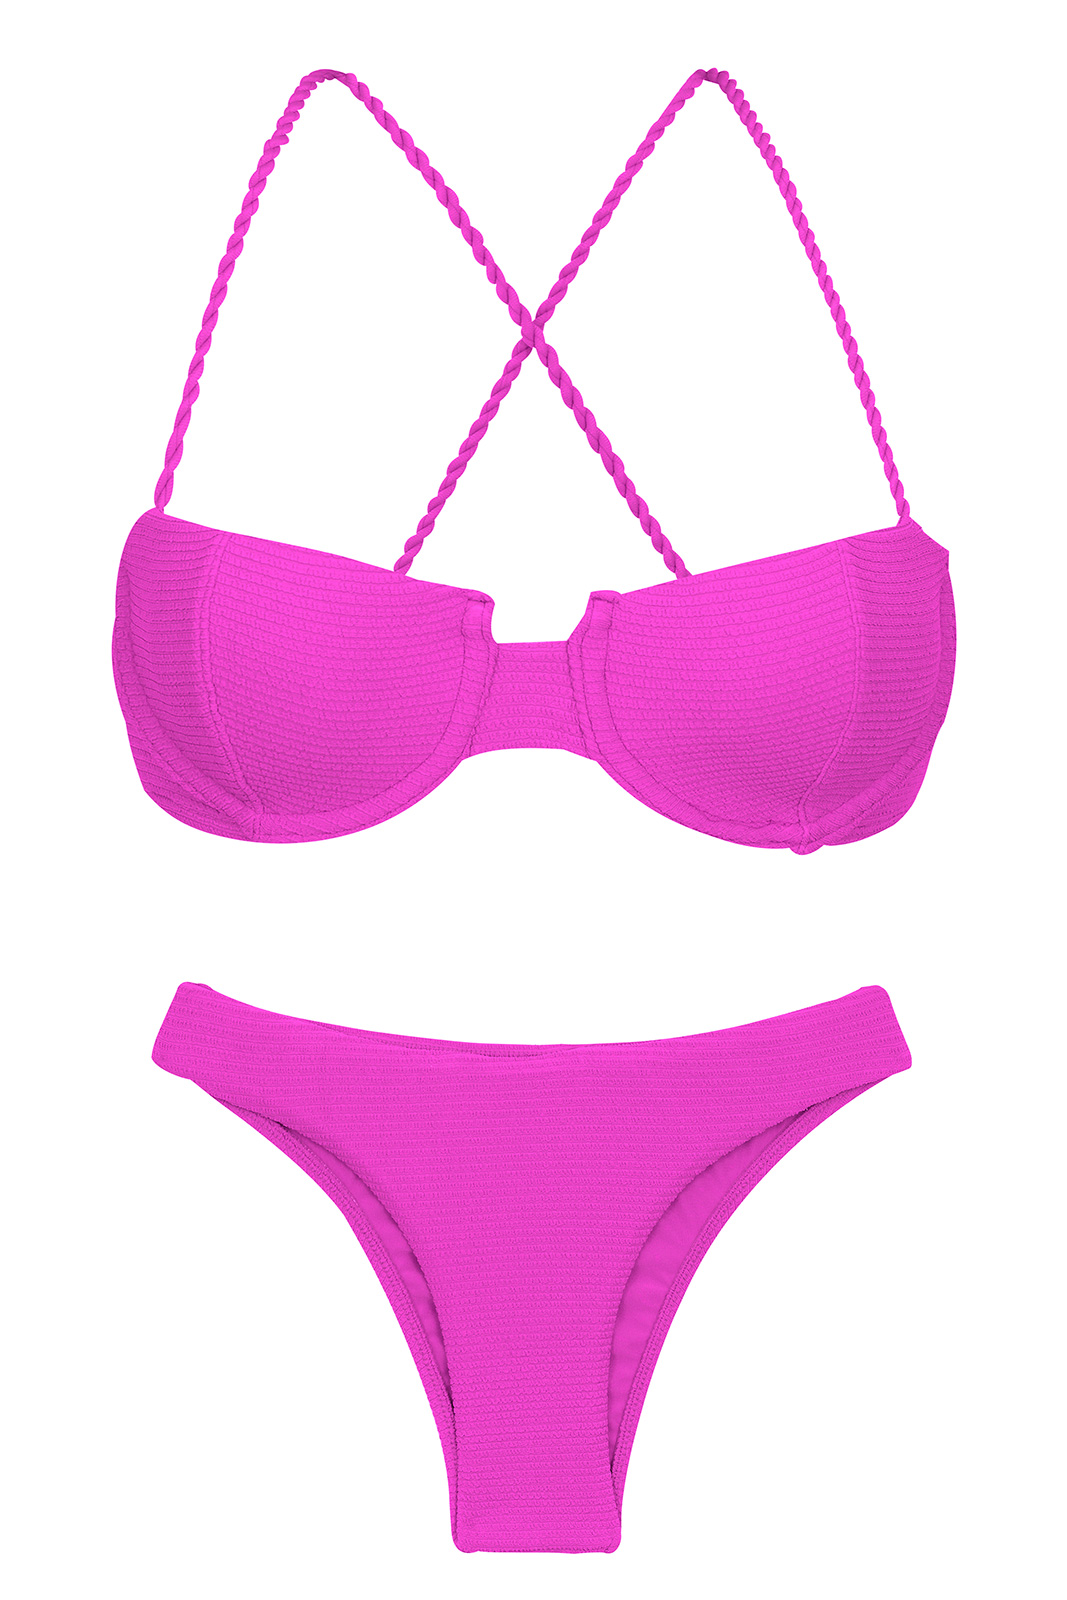 Textured Magenta Pink Balconette Bikini With Crossed Straps Set St 